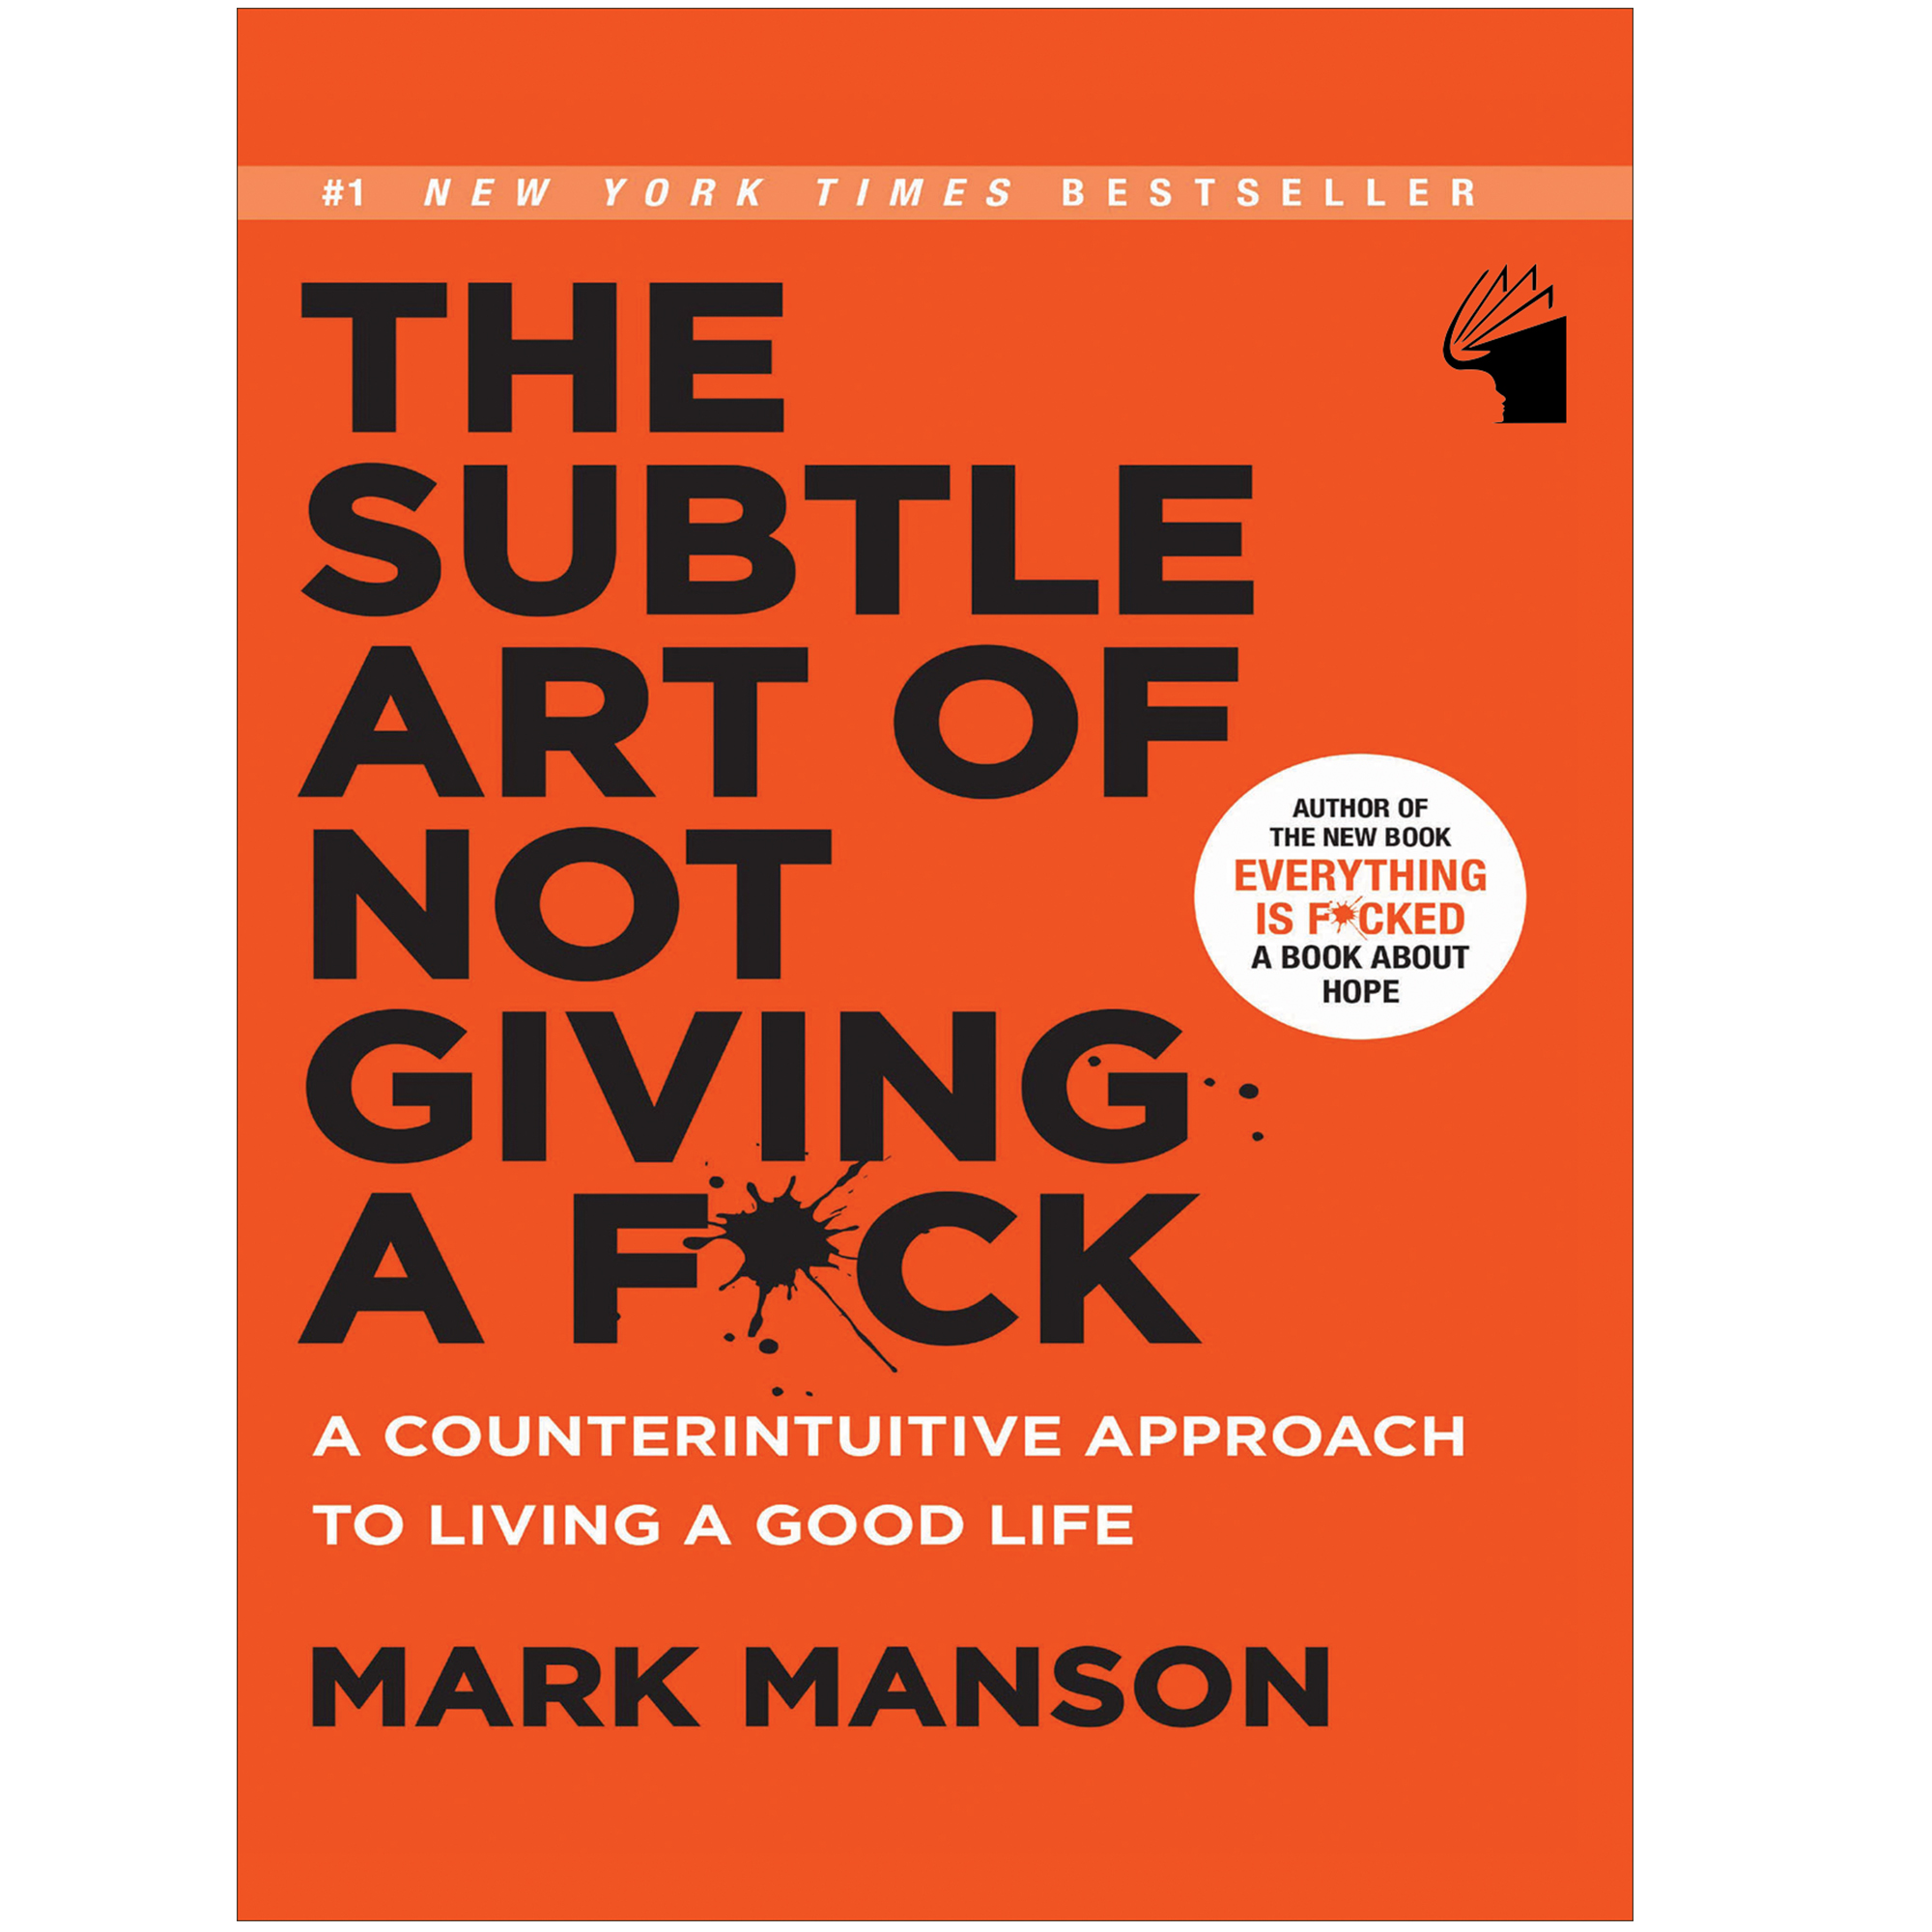 نقد و بررسی کتاب The Subtle Art of Not Giving a Fxck اثر Mark Manson انتشارات معیار علم توسط خریداران